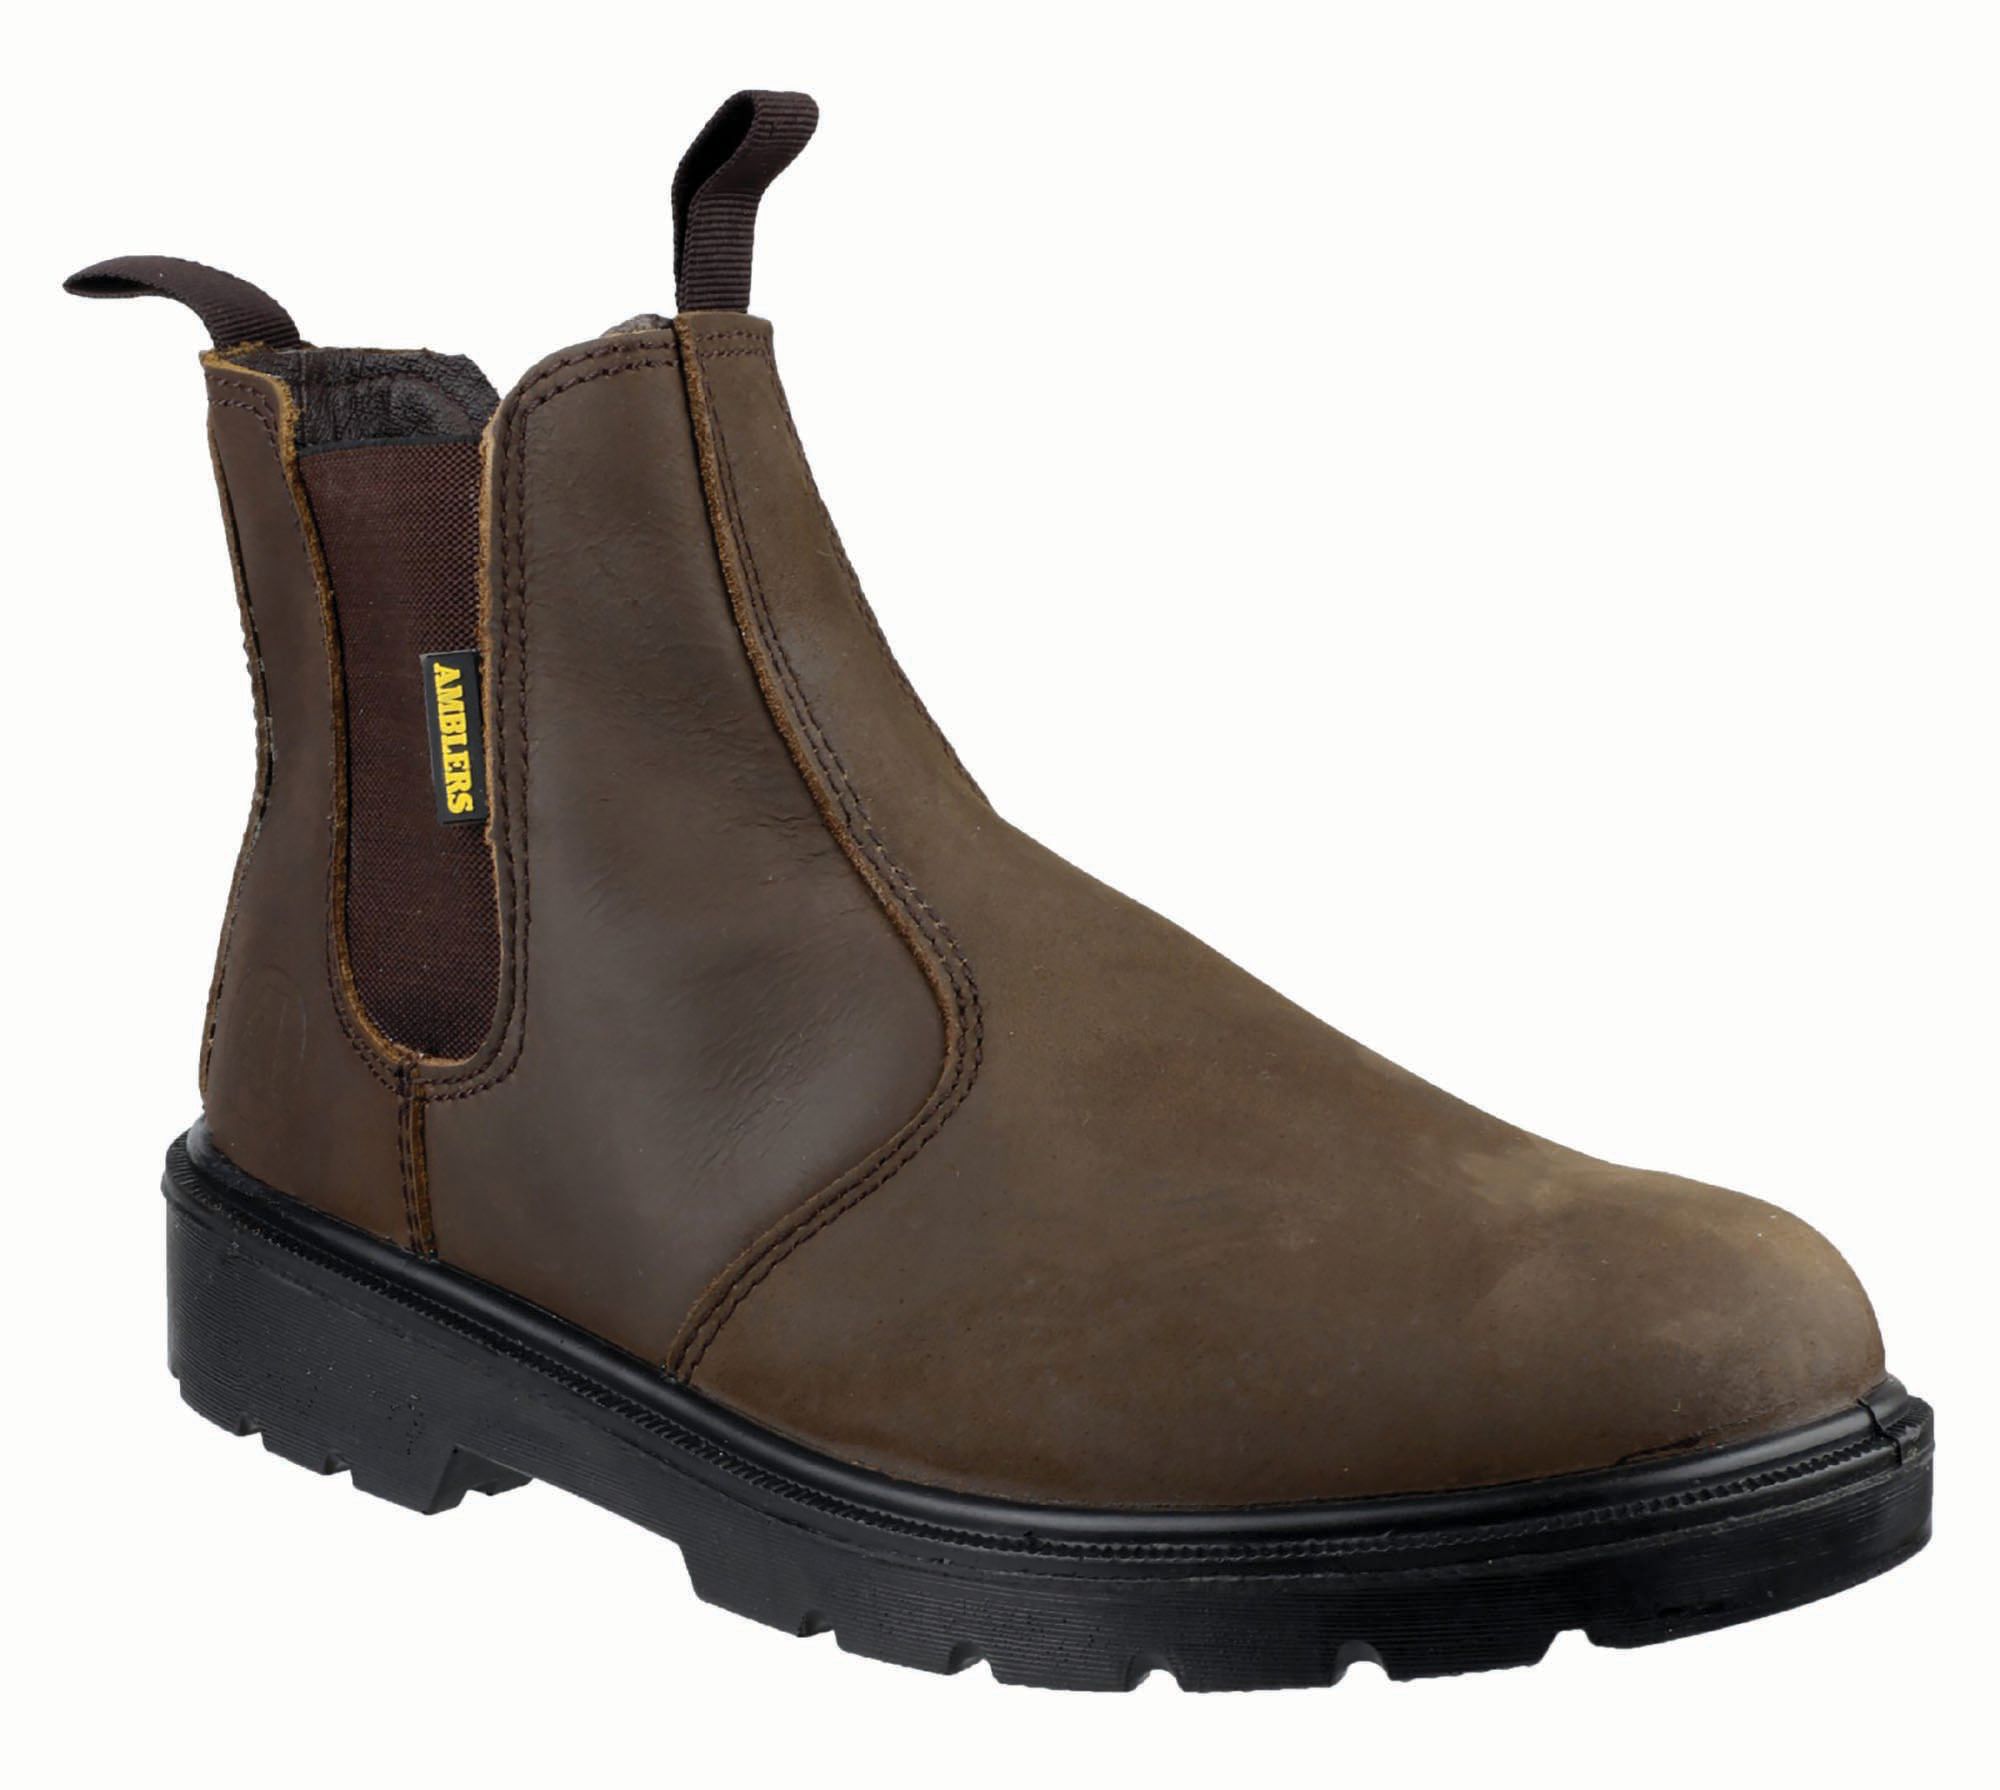 Image of Amblers Safety FS128 Dealer Safety Boot - Brown Size 9